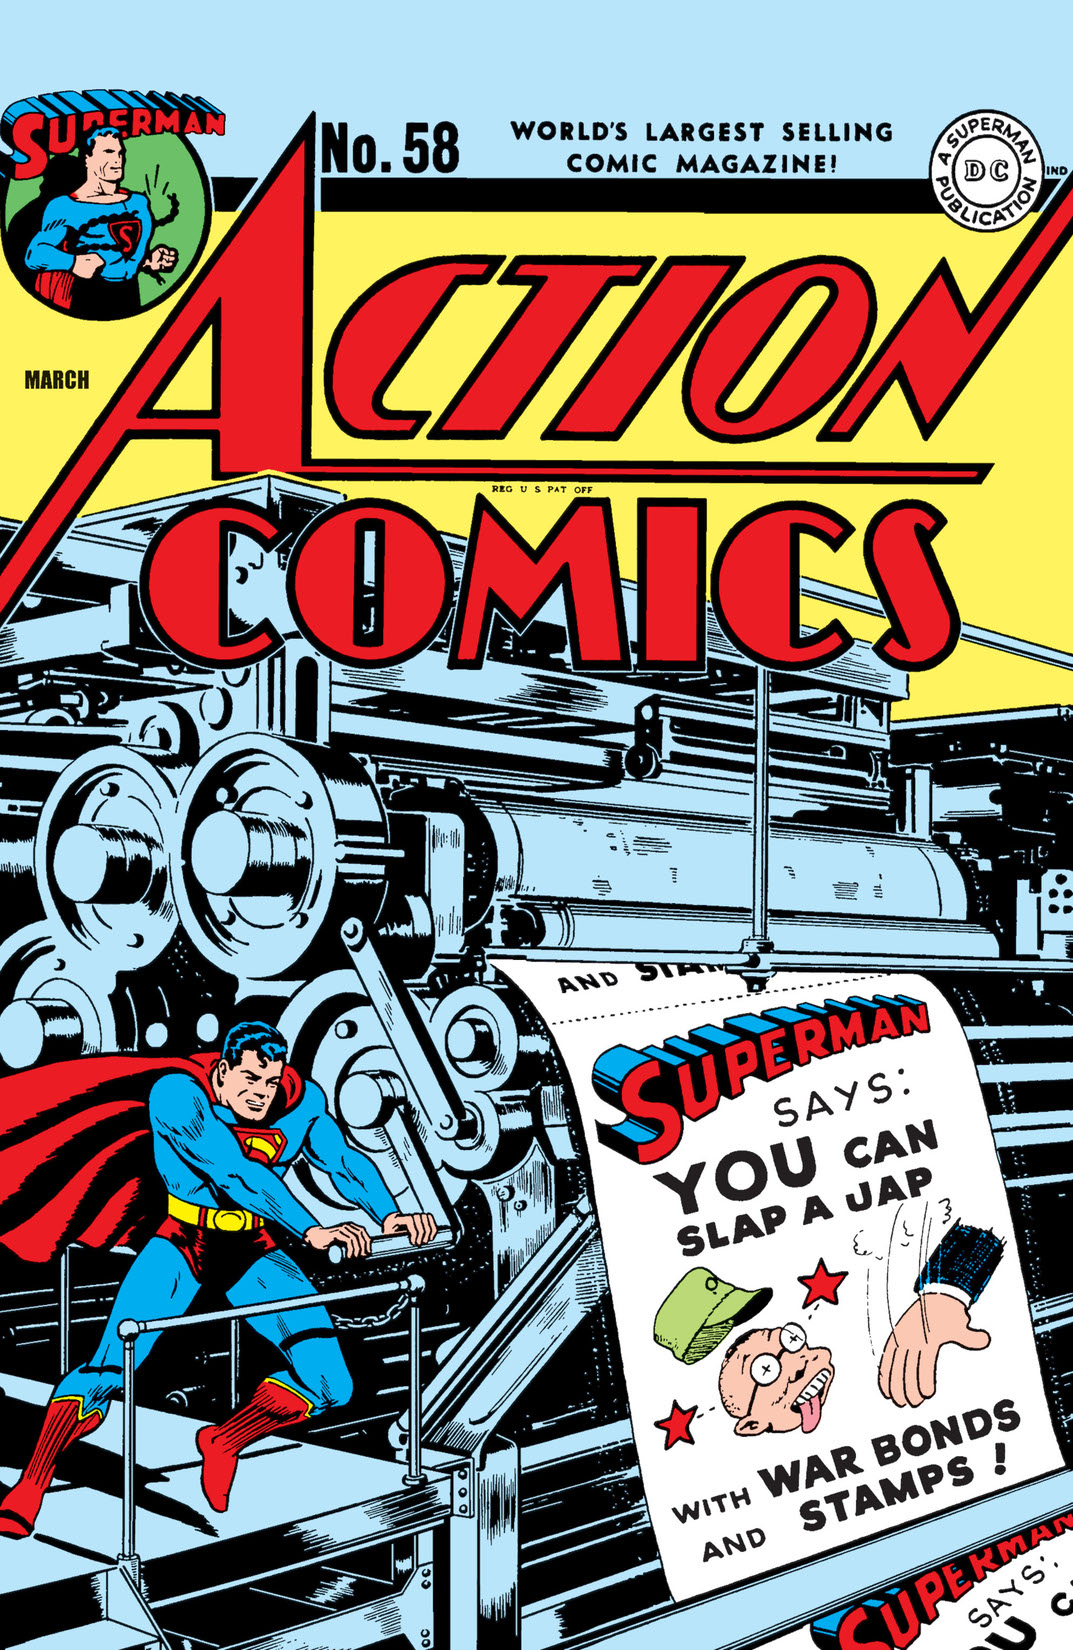 Action Comics (1938-) #58 preview images